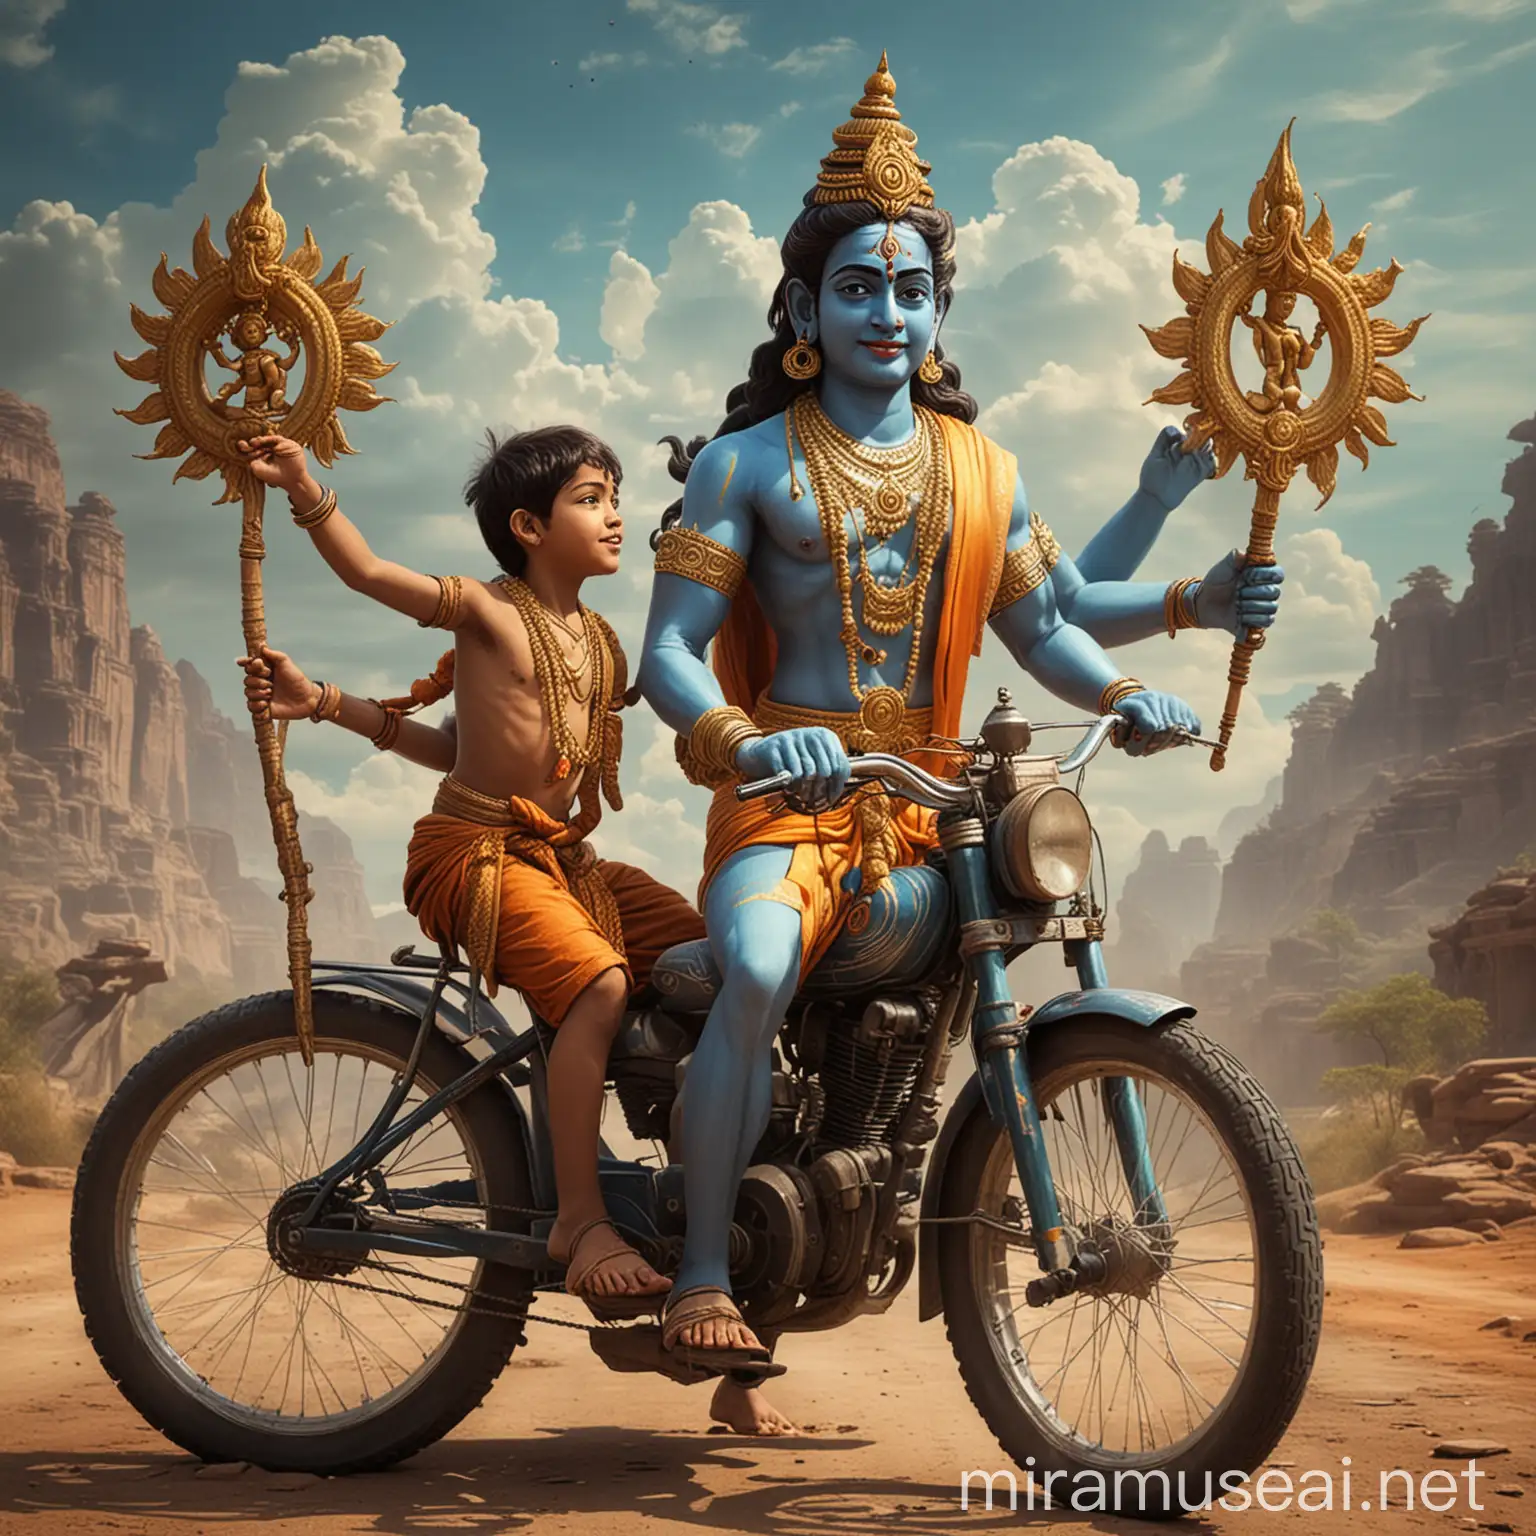 A boy take a bike ride with a god Vishnu or shiva